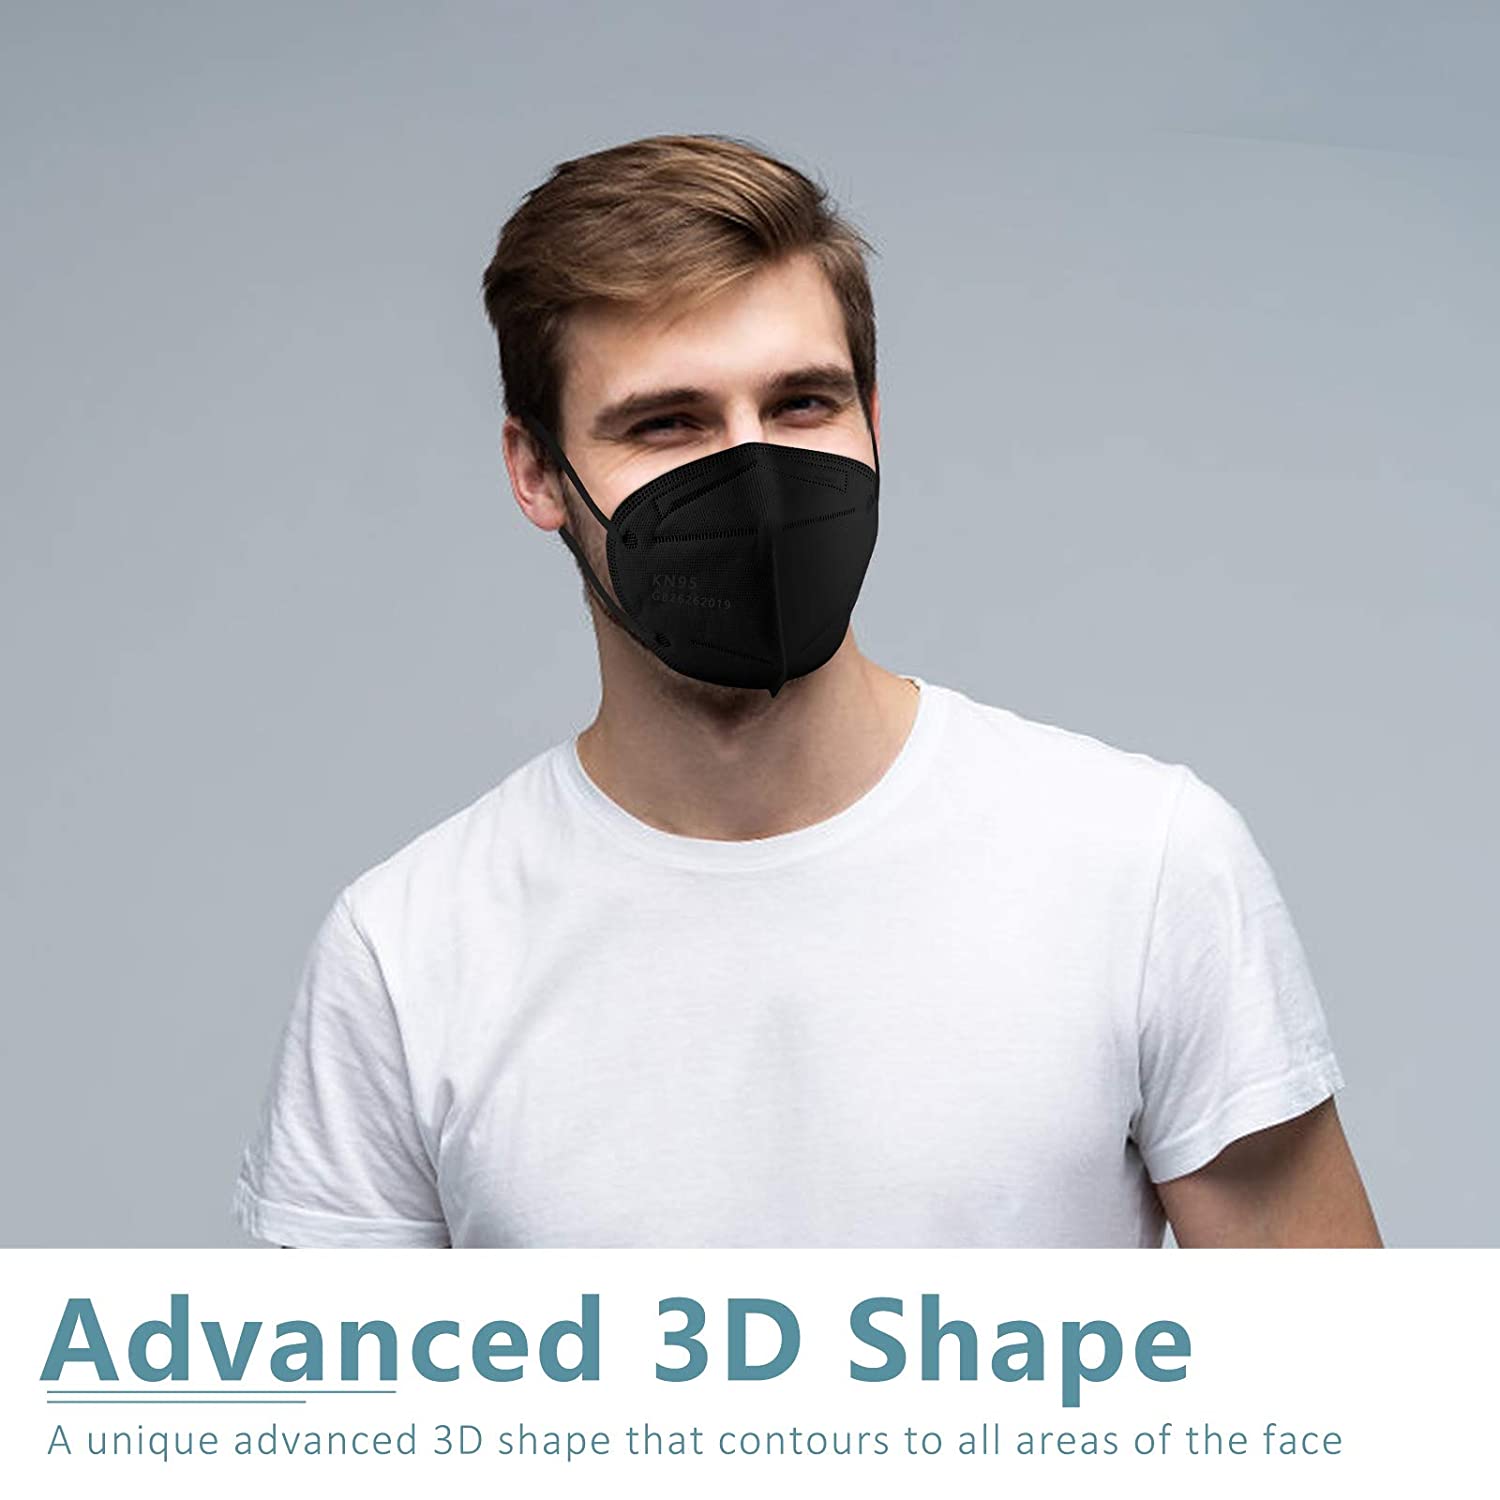 Black KN95 Face Mask 20 PCs- Filter Efficiency≥95%, Breathable Protection Masks Against PM2.5